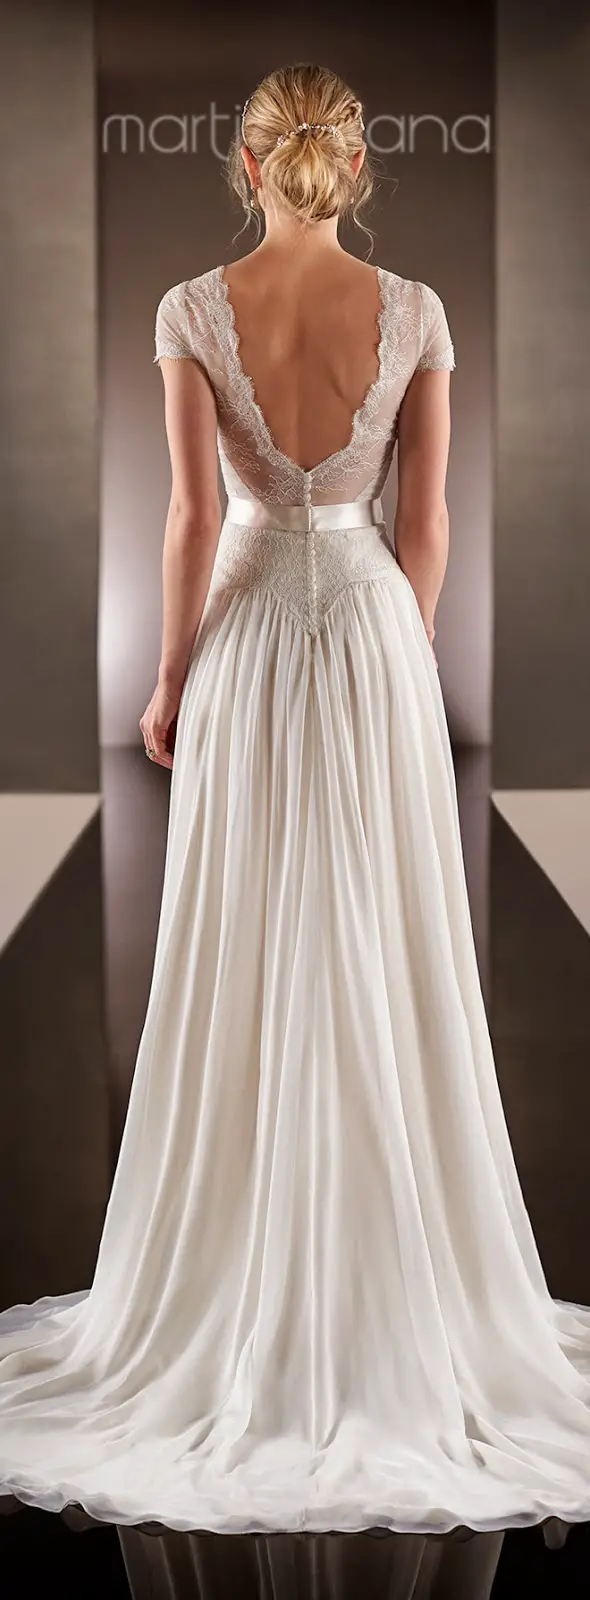 Best Wedding Dresses of 2014 - Martina Liana